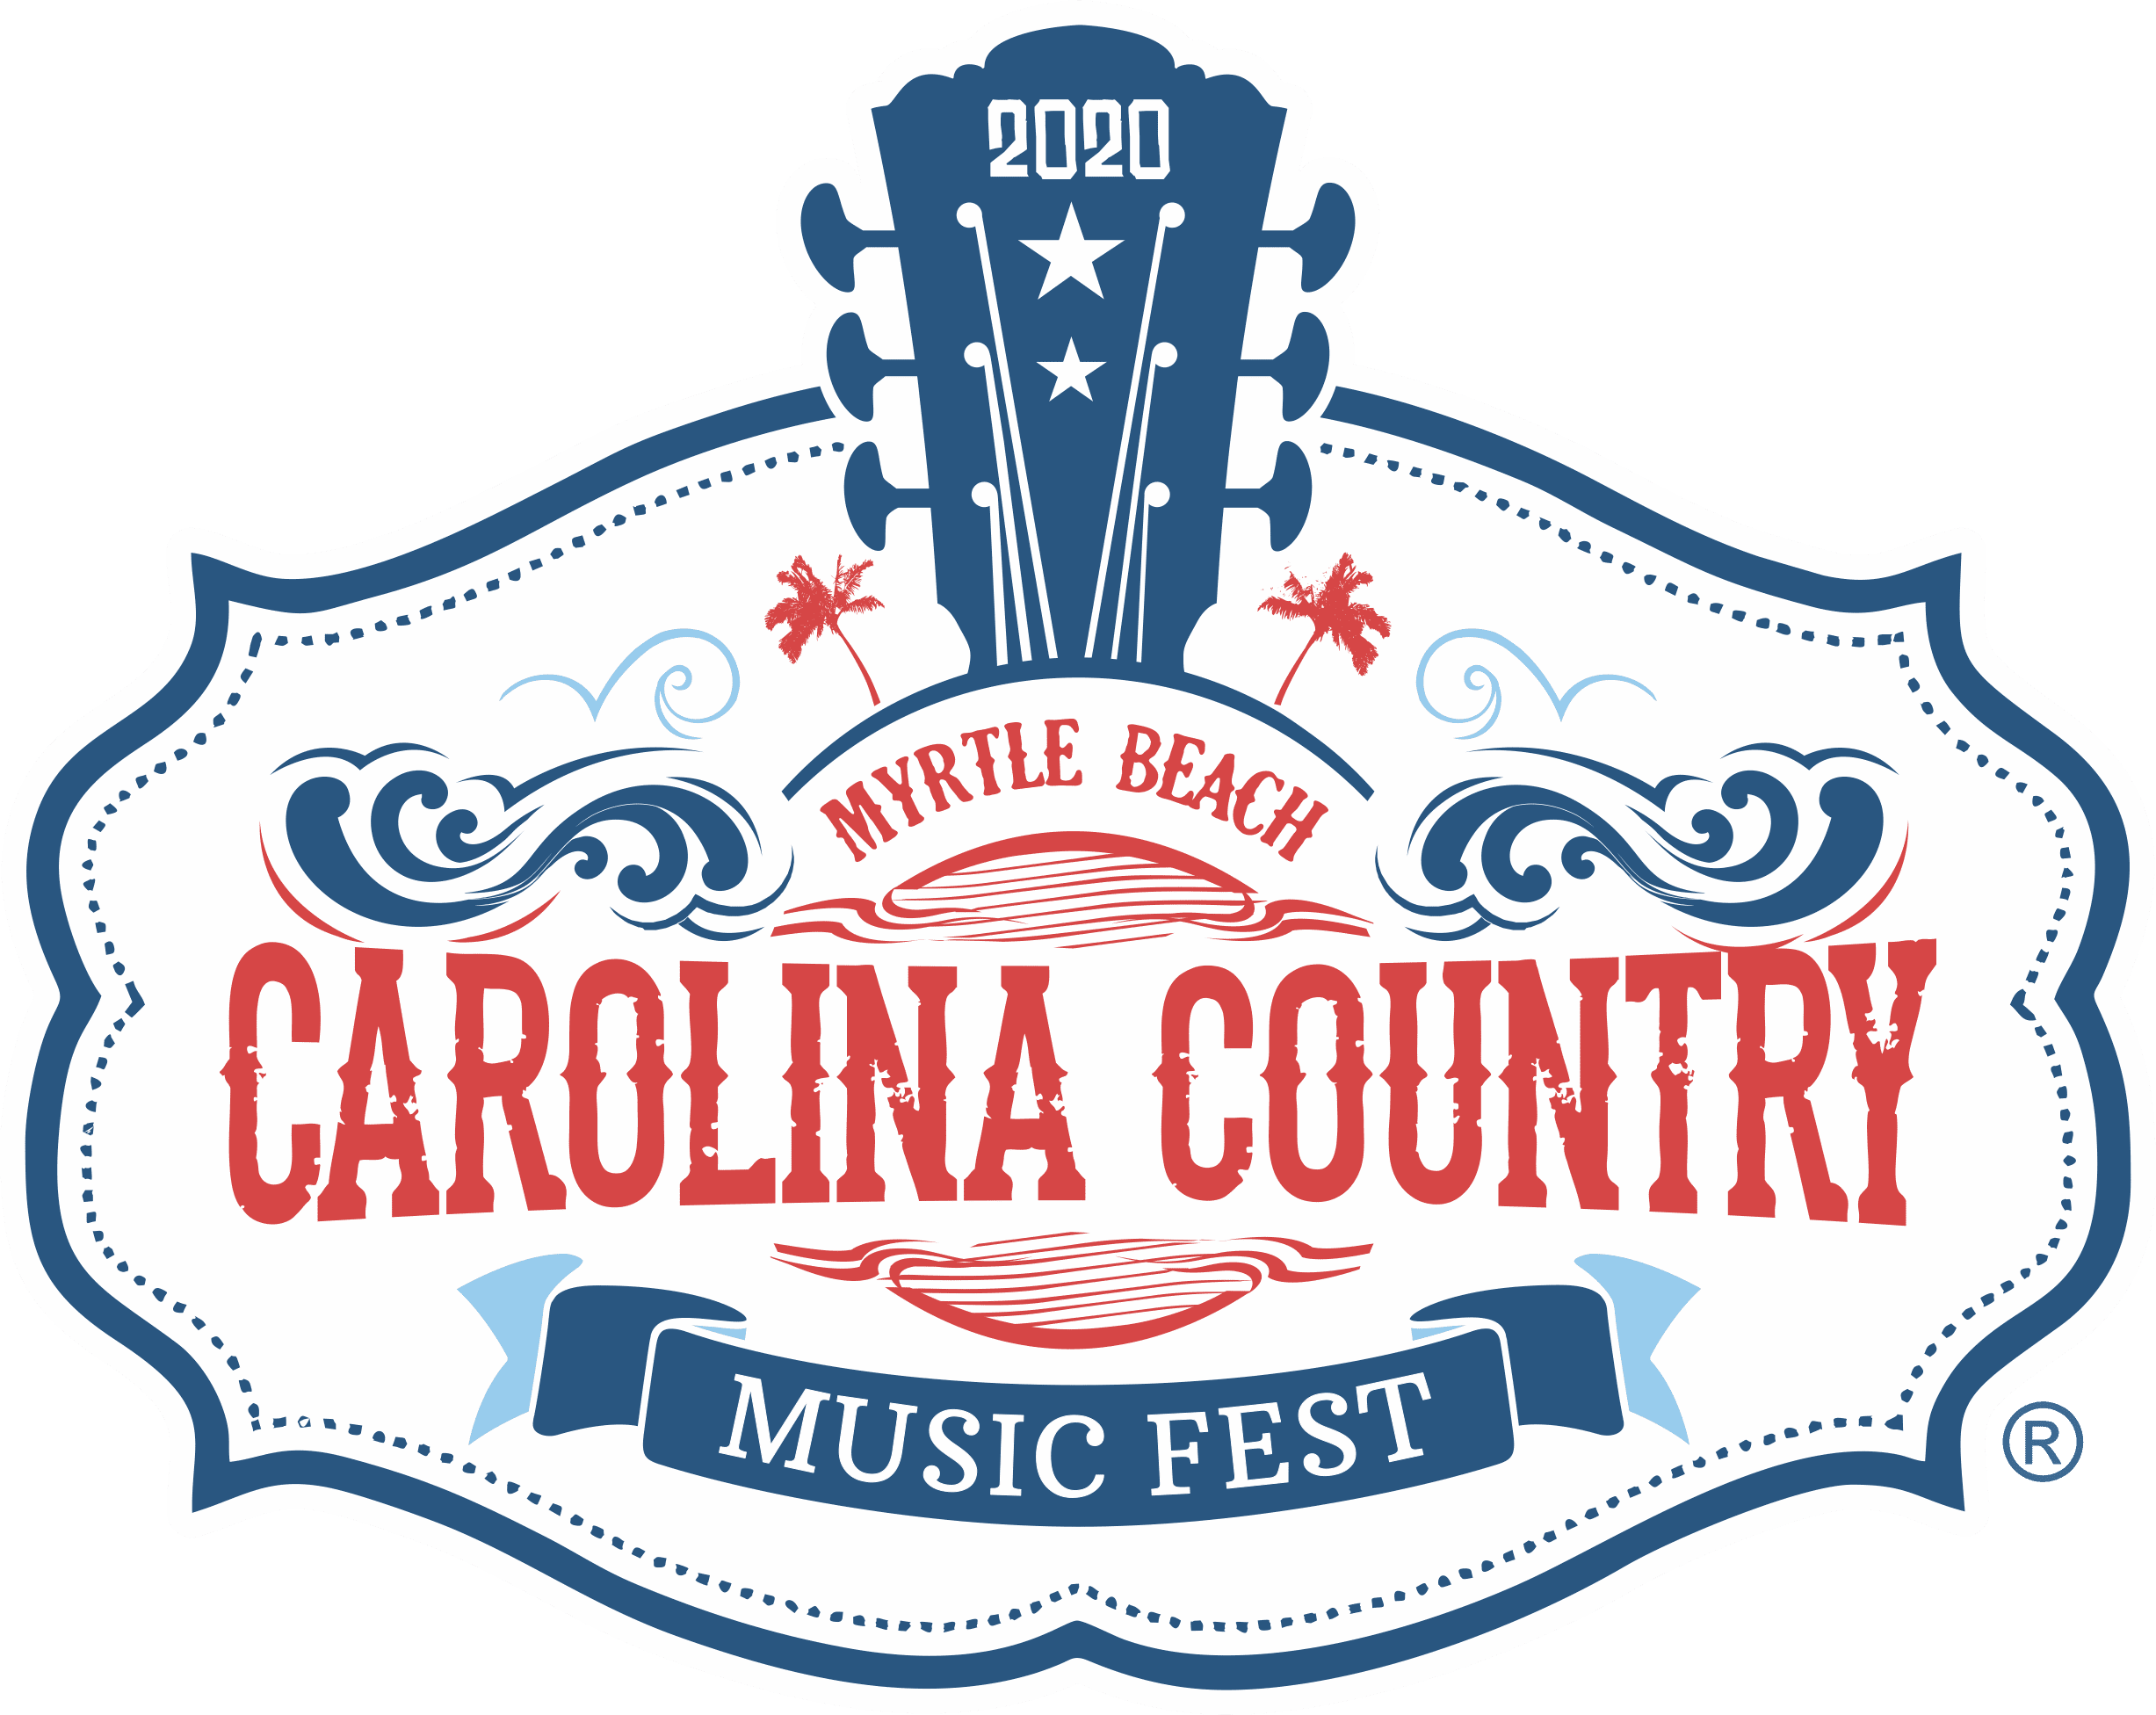 Carolina Country Music Festival Promotion